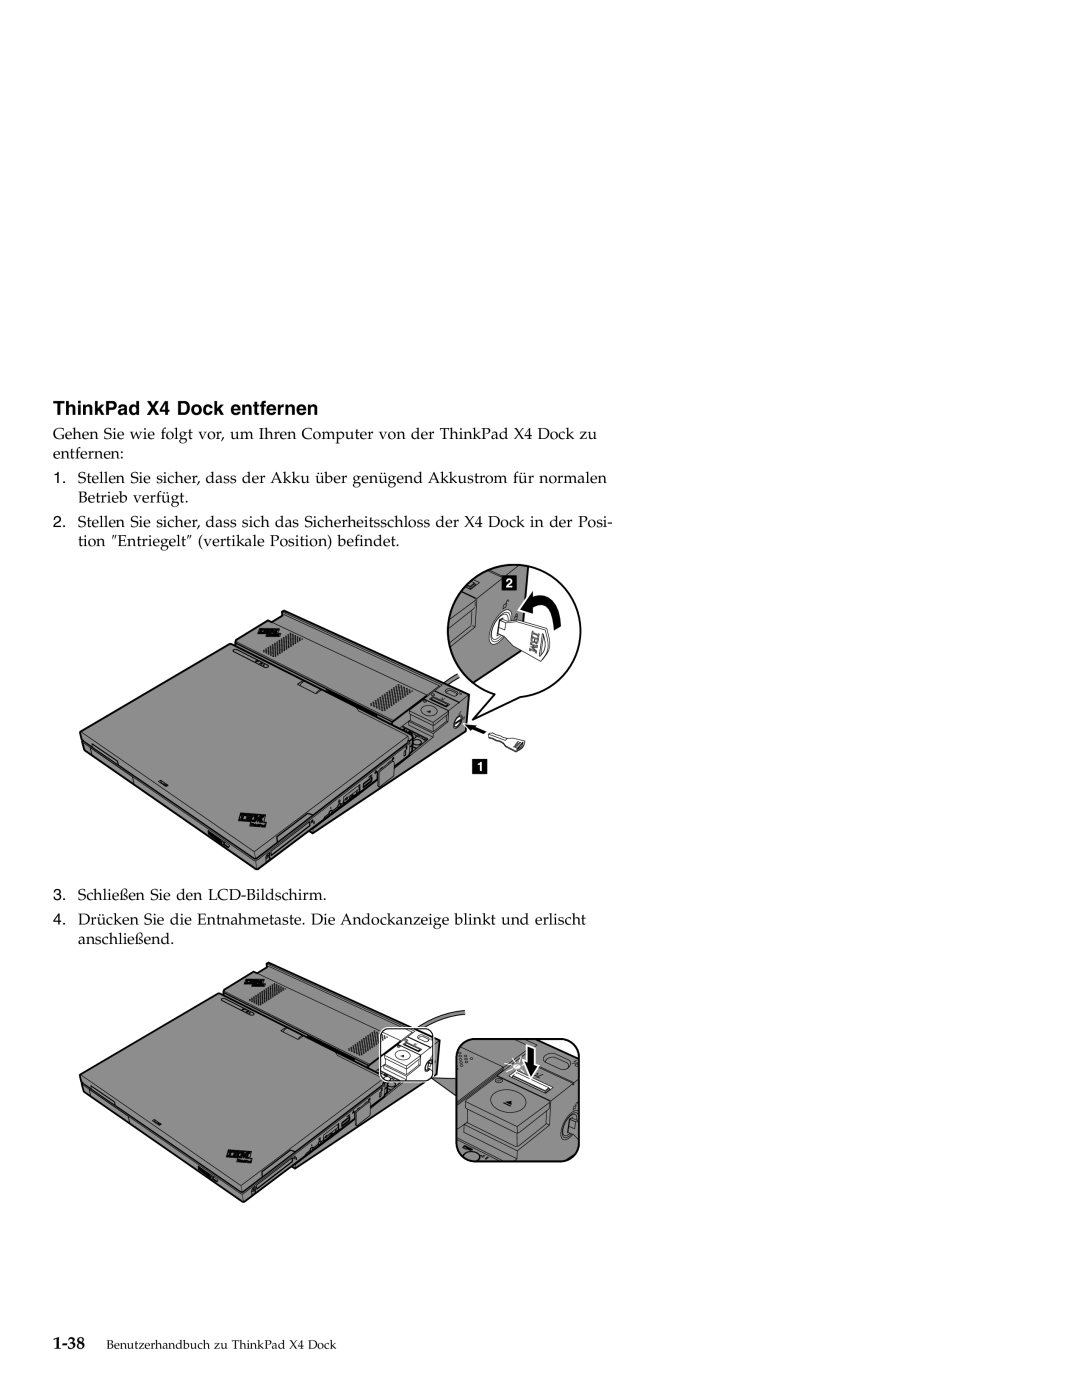 IBM manual ThinkPad X4 Dock entfernen, Benutzerhandbuch zu ThinkPad X4 Dock 